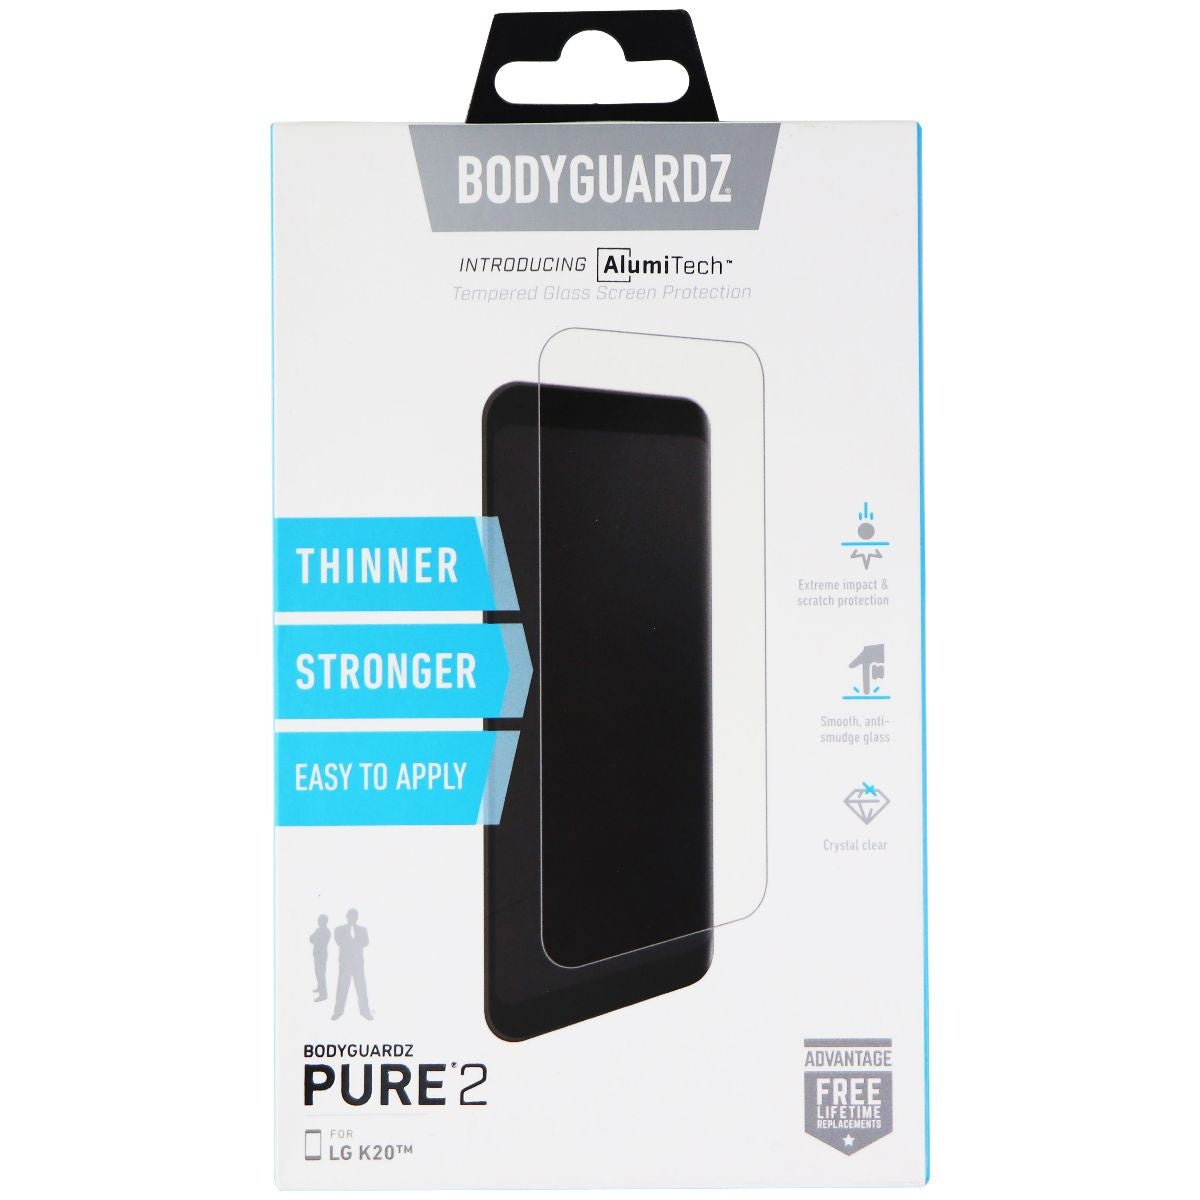 BodyGuardz Pure 2 AlumiTech Screen Protector for LG K20 - Clear Cell Phone - Screen Protectors BODYGUARDZ    - Simple Cell Bulk Wholesale Pricing - USA Seller